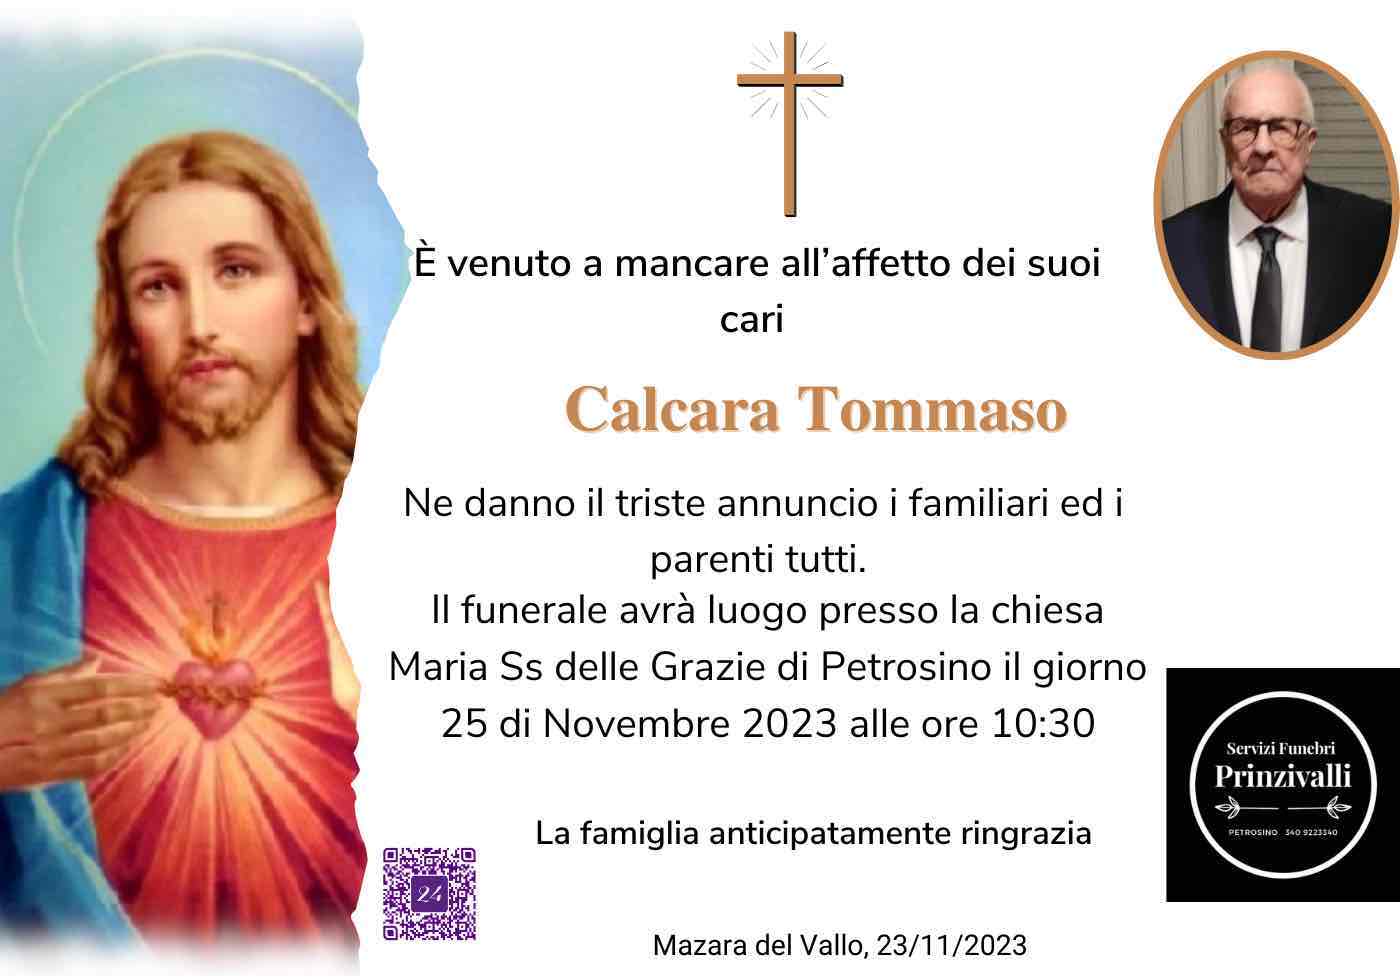 Tommaso Calcara